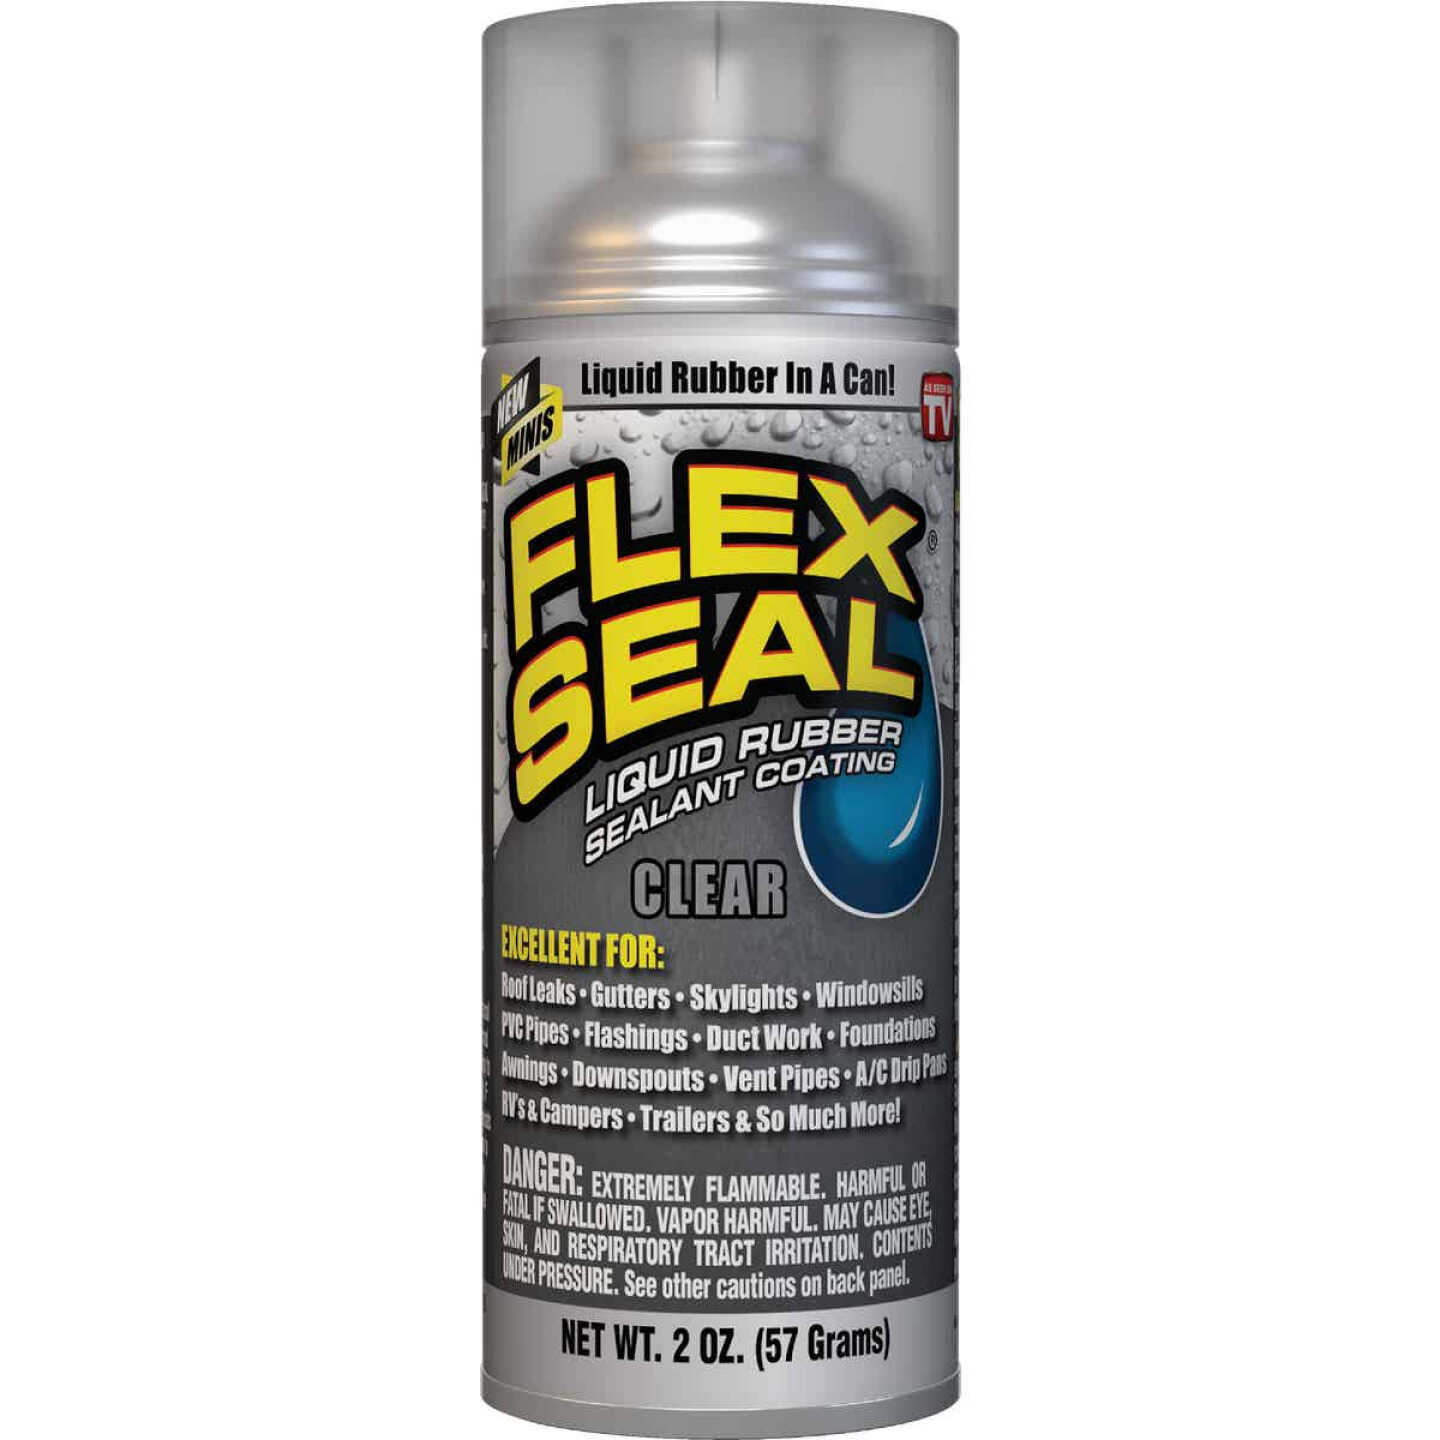 FLEX SEAL 2 Oz. Mini Spray Rubber Sealant, Clear